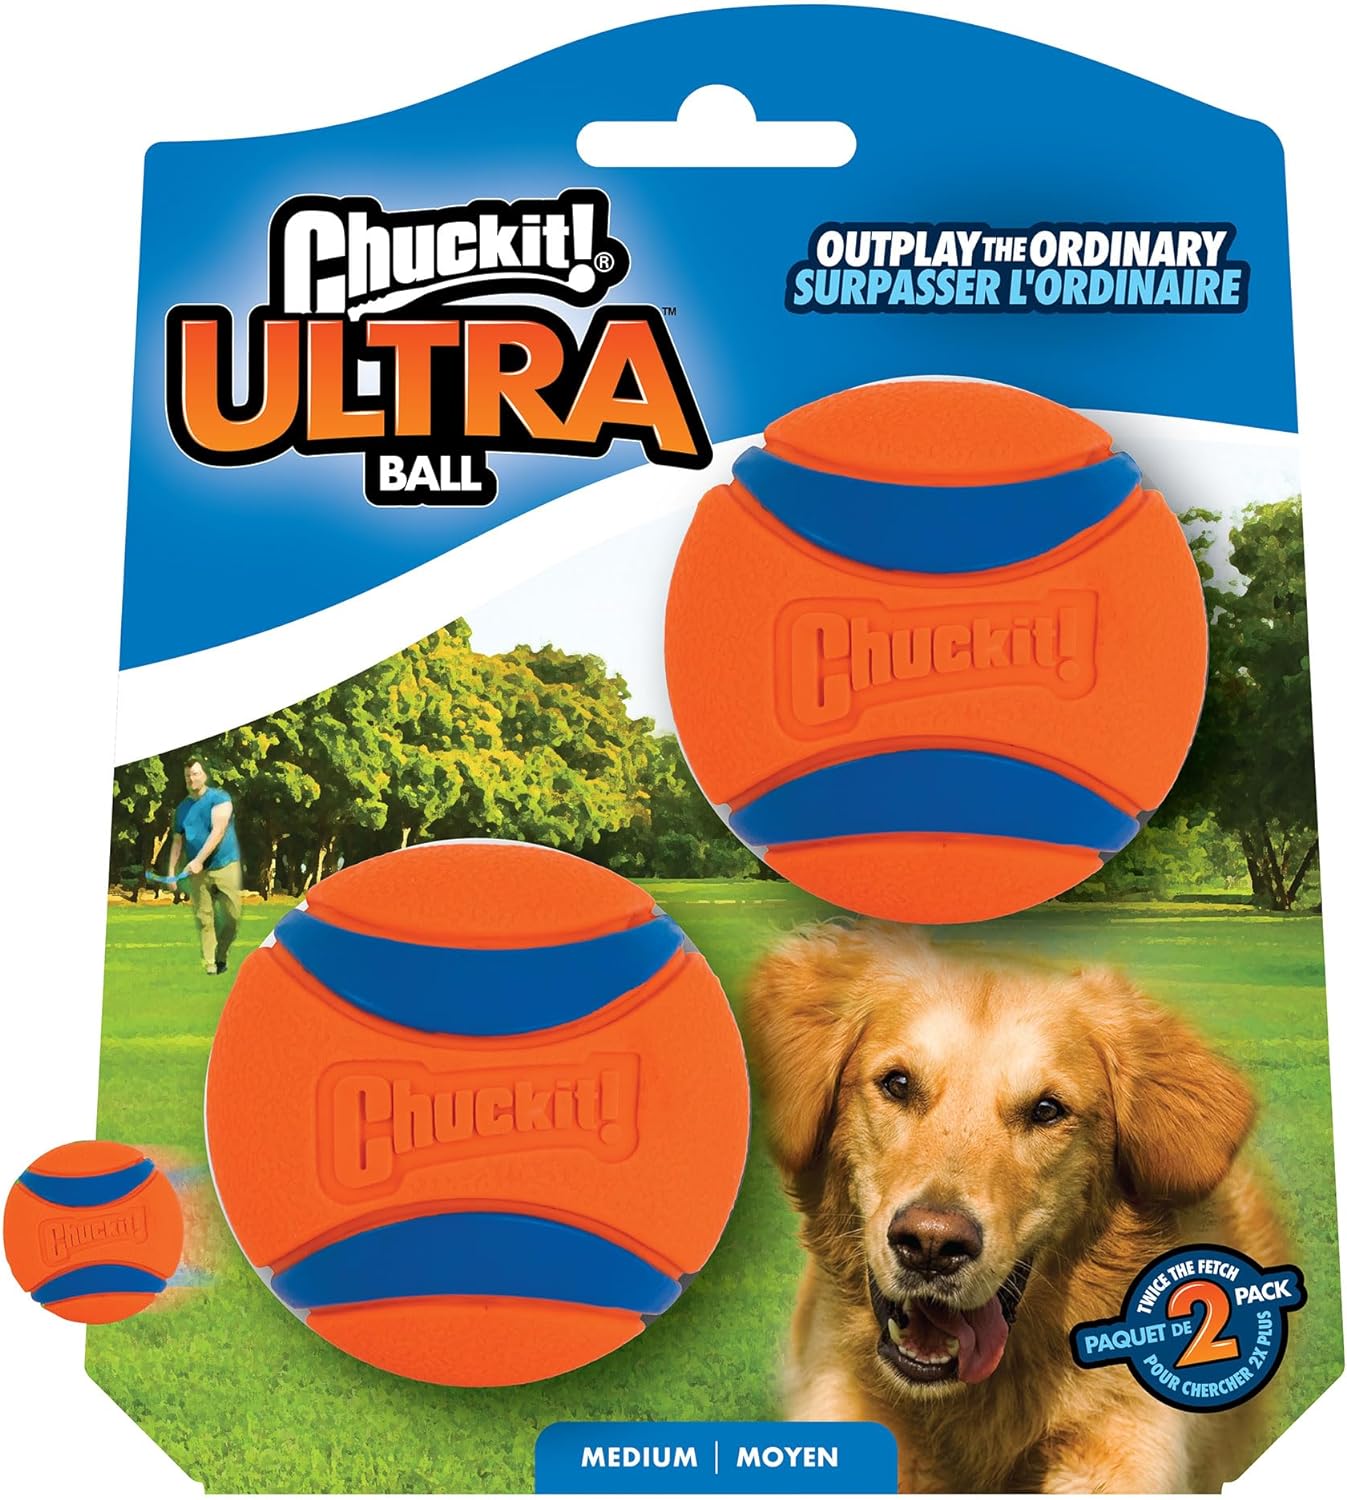 2-Pack Chuckit! Ultra Ball Medium Dog Toy (2.5" Diameter) $4.99 + Free Shipping